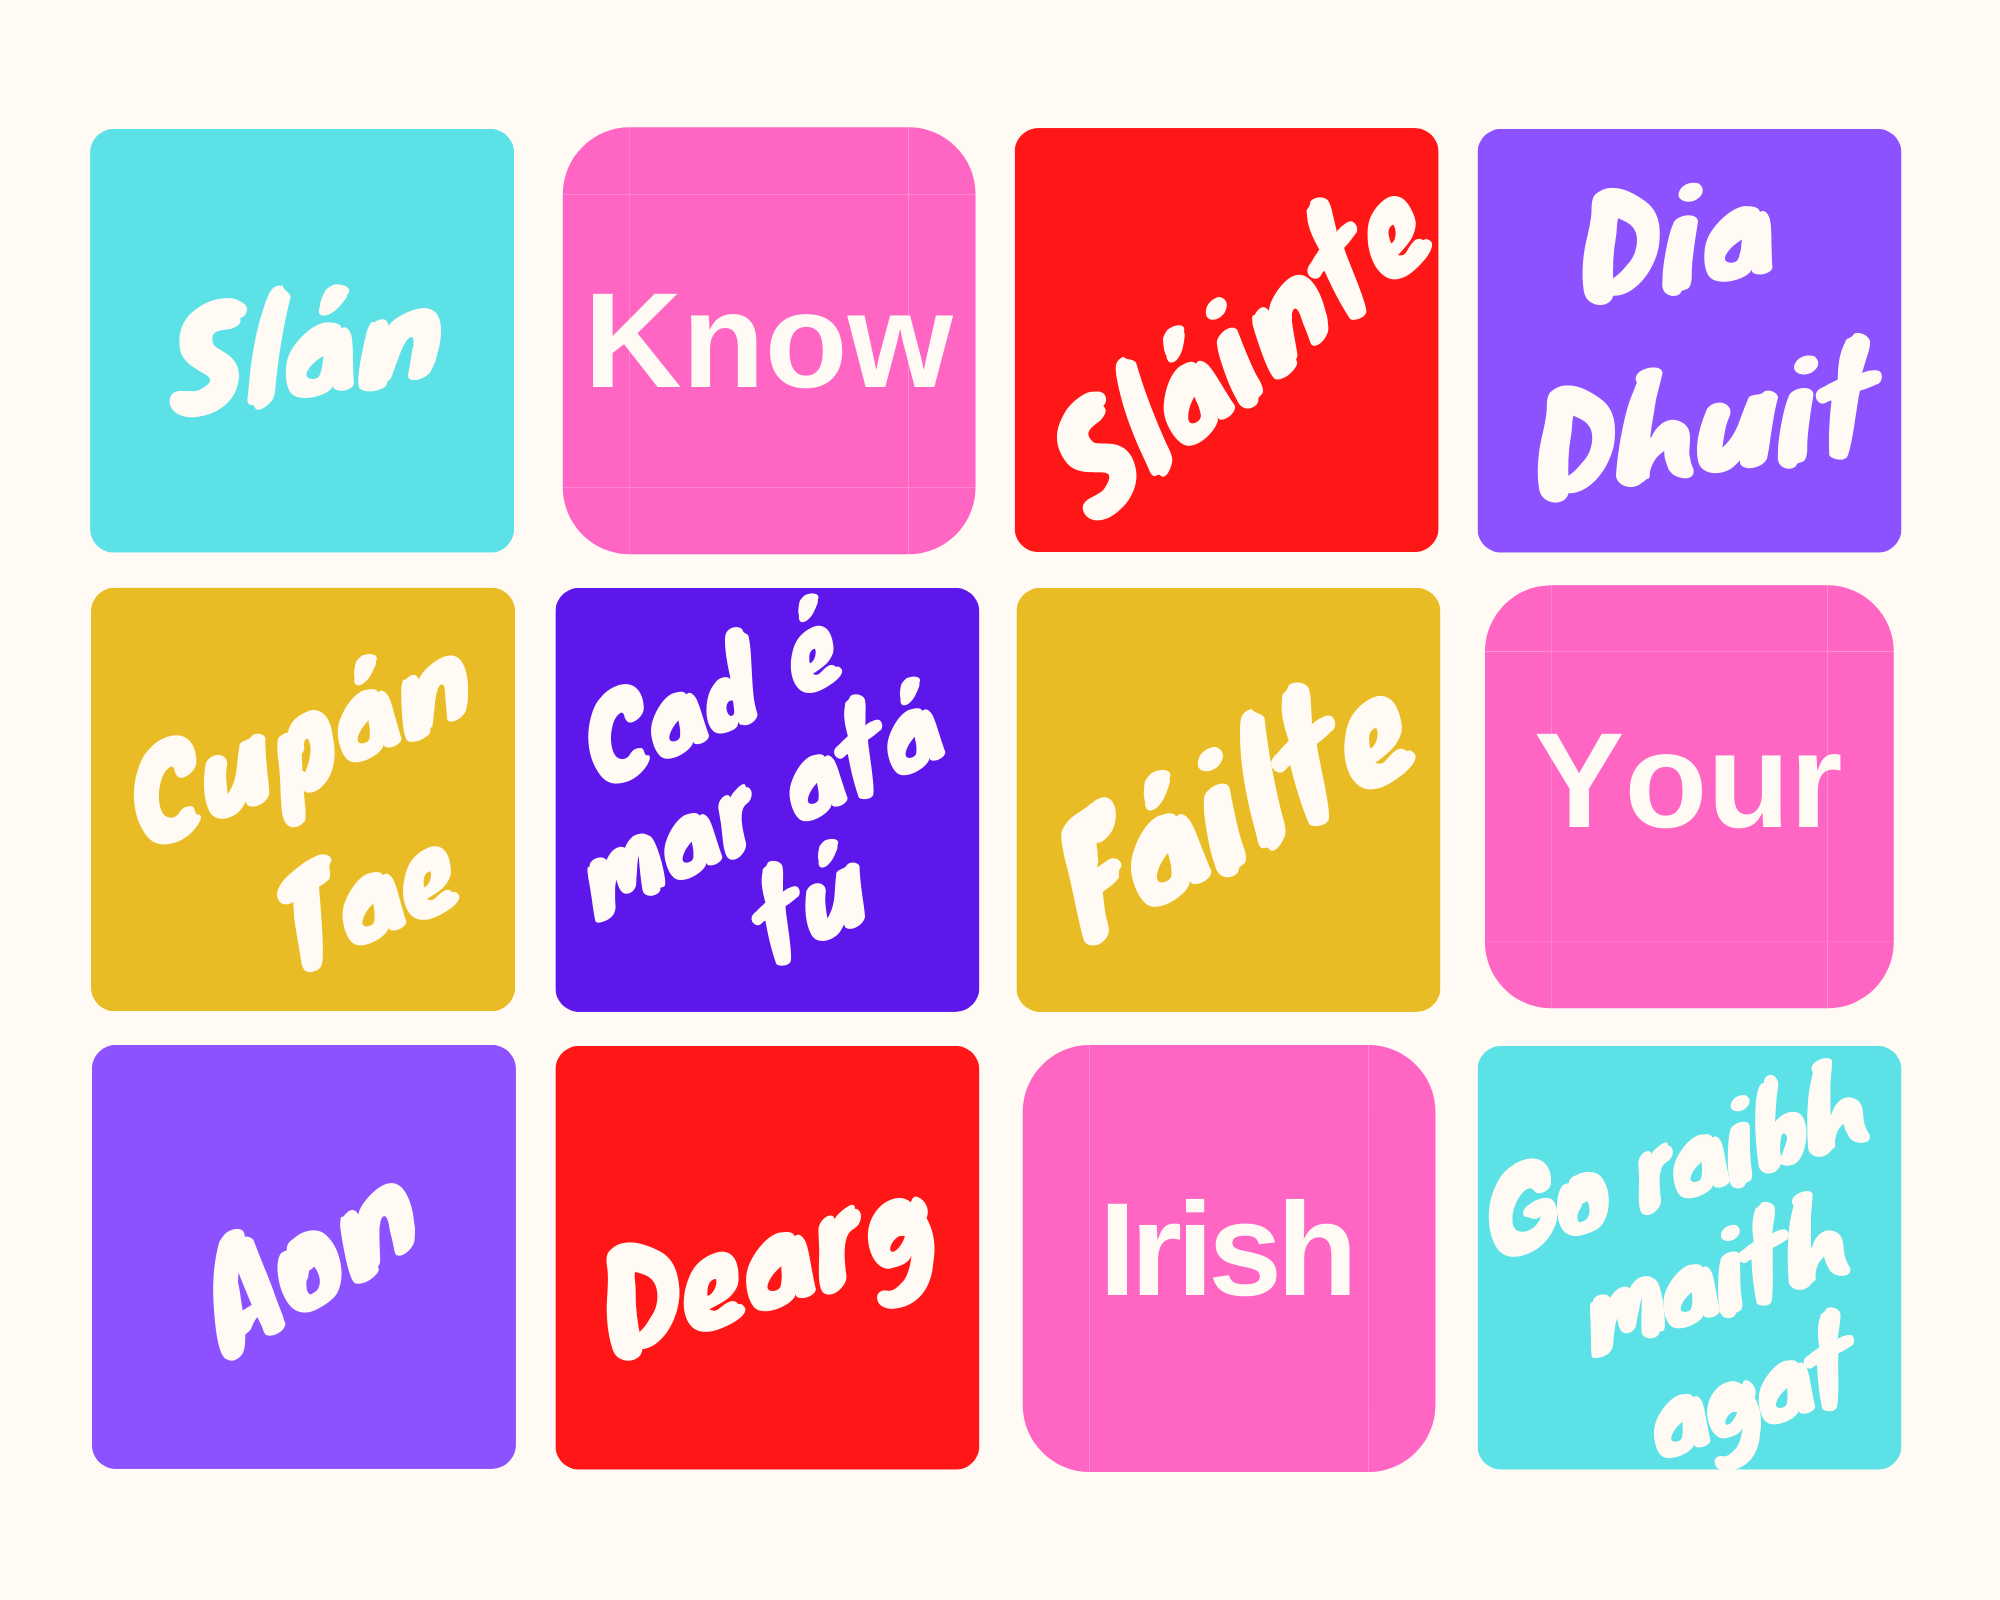 Learn a cúpla focal / a few words of Irish during Seachtain Na Gaeilge (Irish Language Week).